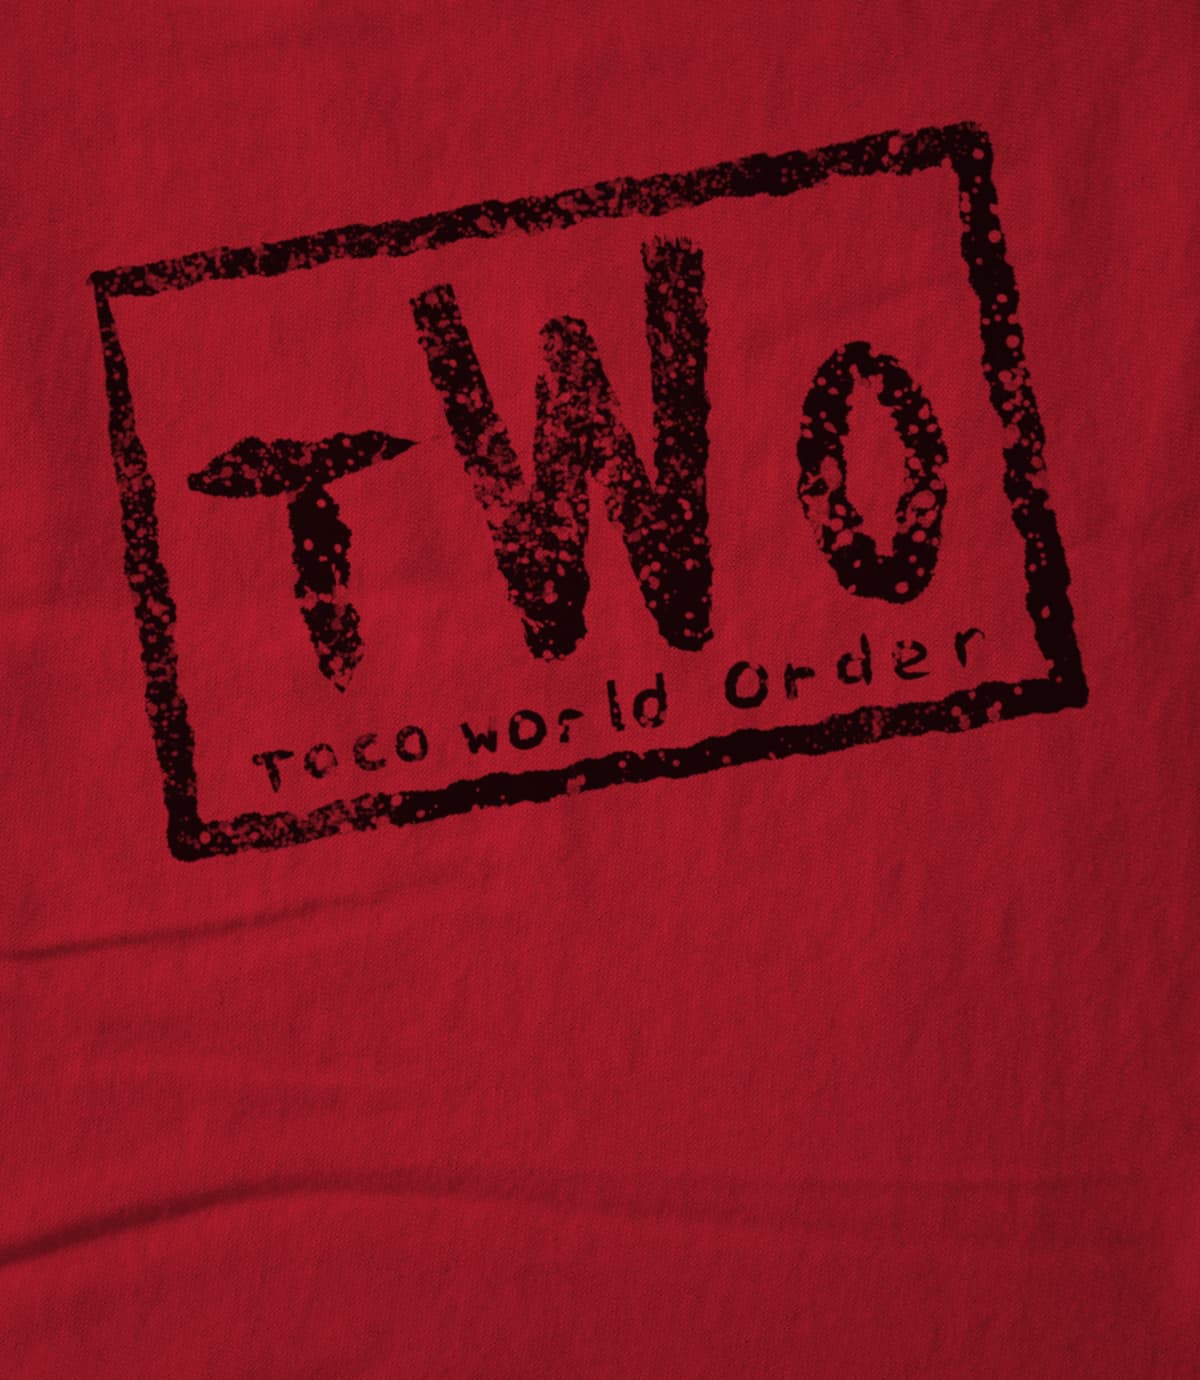 Tacostabber taco world order 1616391160